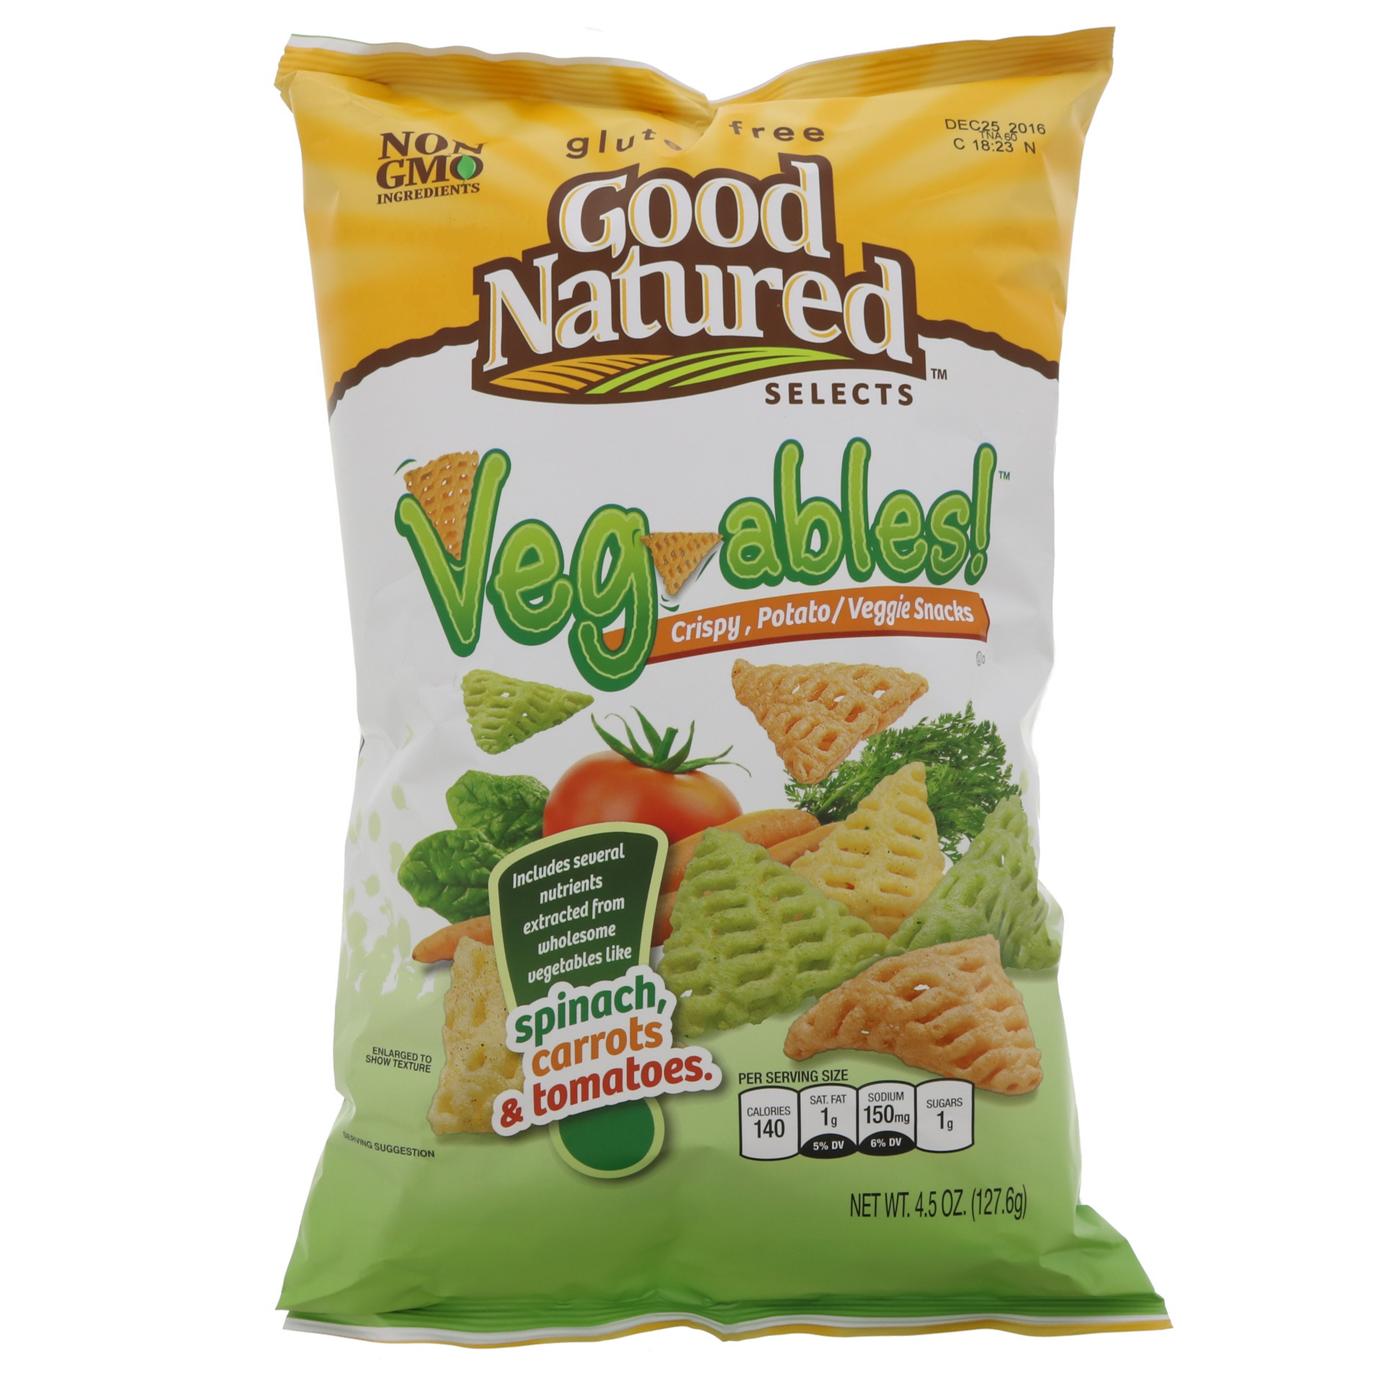 Good Natured Veg-Ables! Crispy, Potato/ Veggie Snacks; image 1 of 2